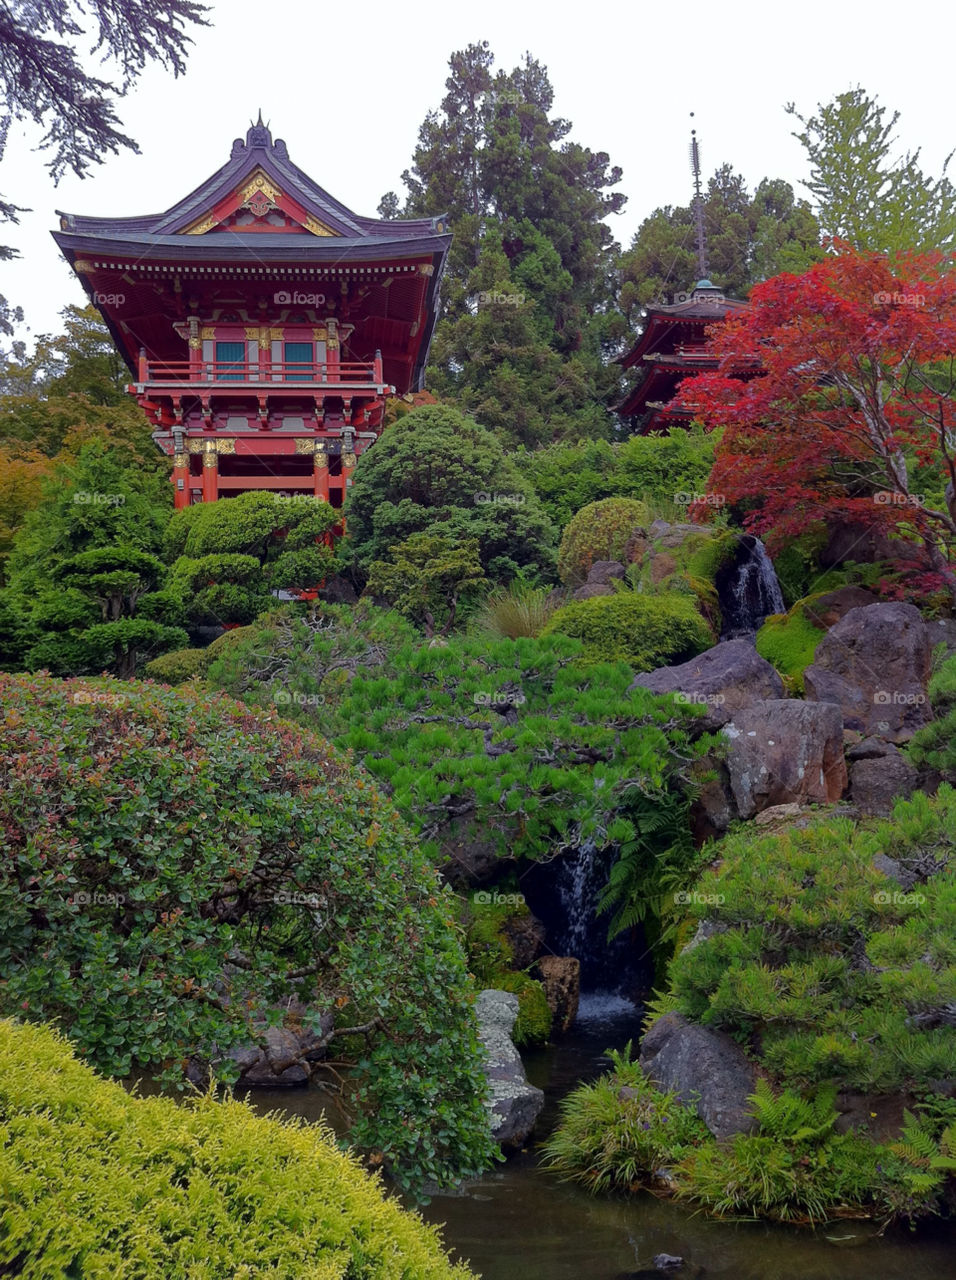 Japanese tea garden at golden gate park